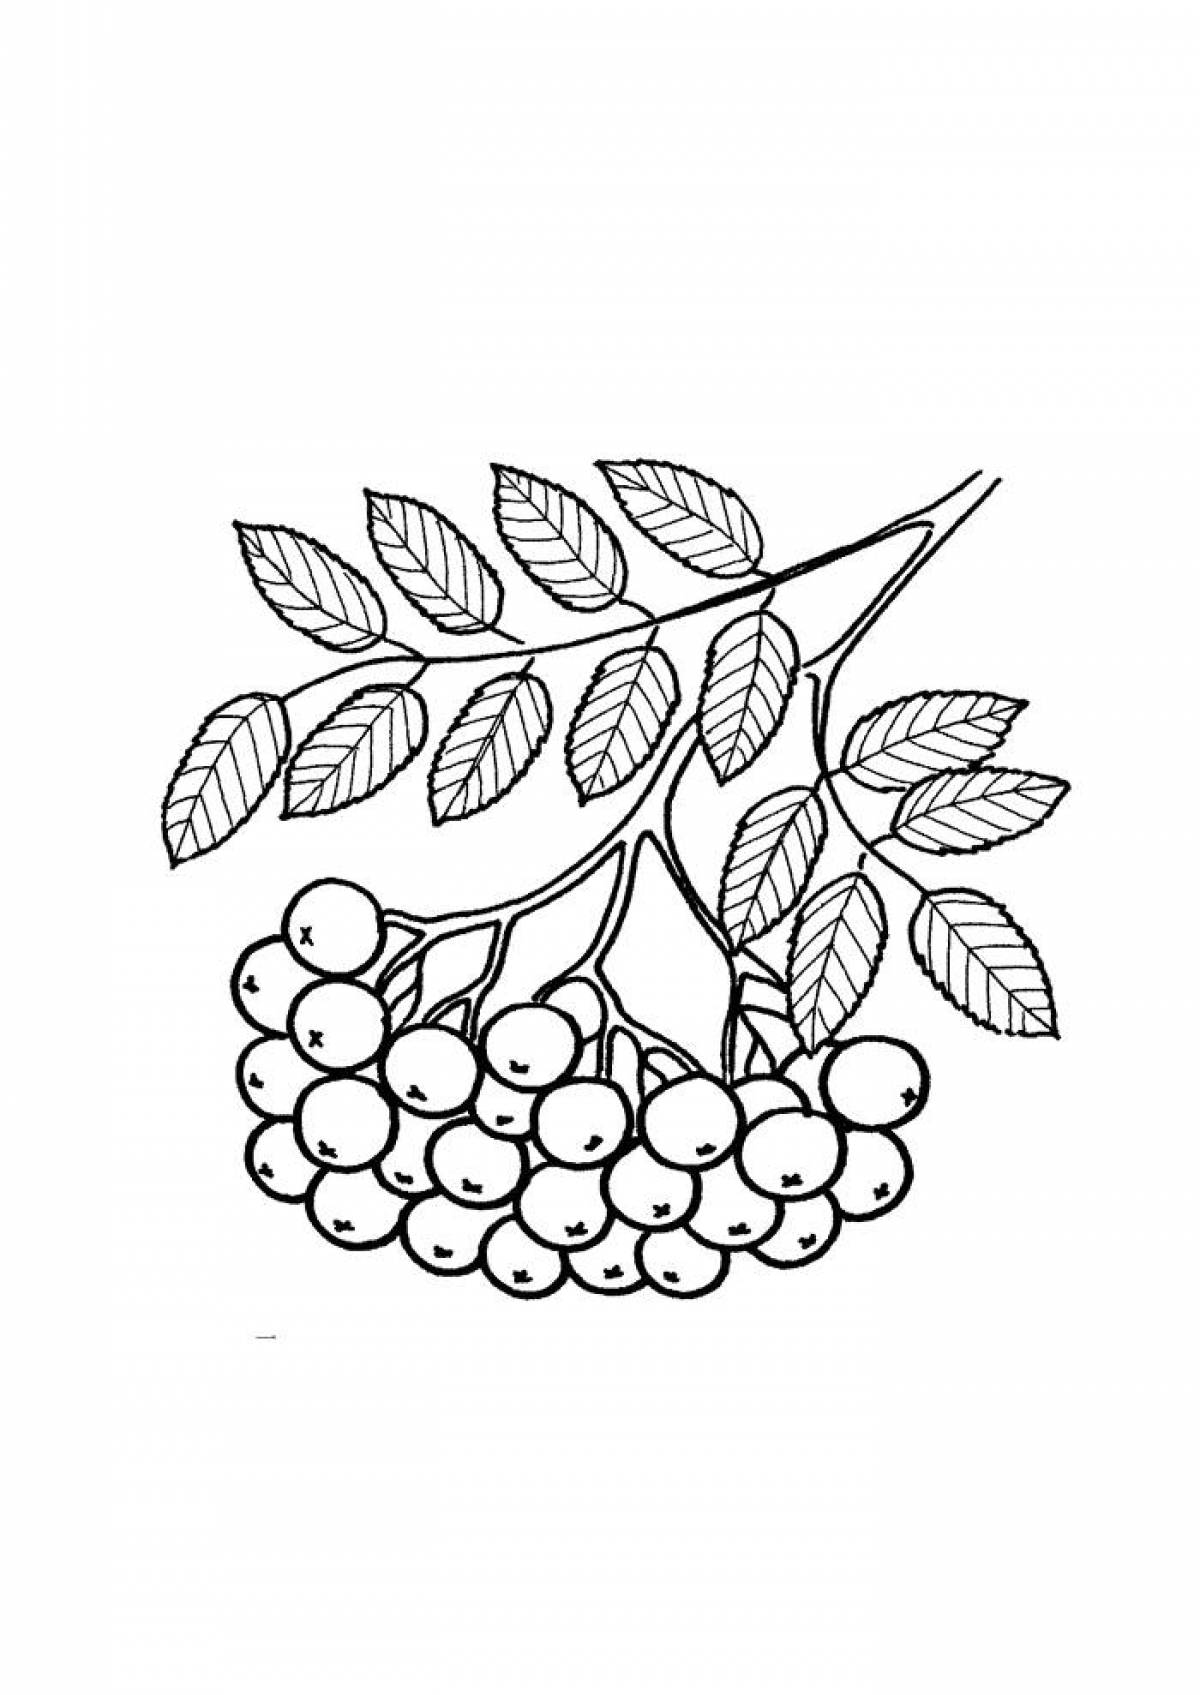 Rowan tree coloring page